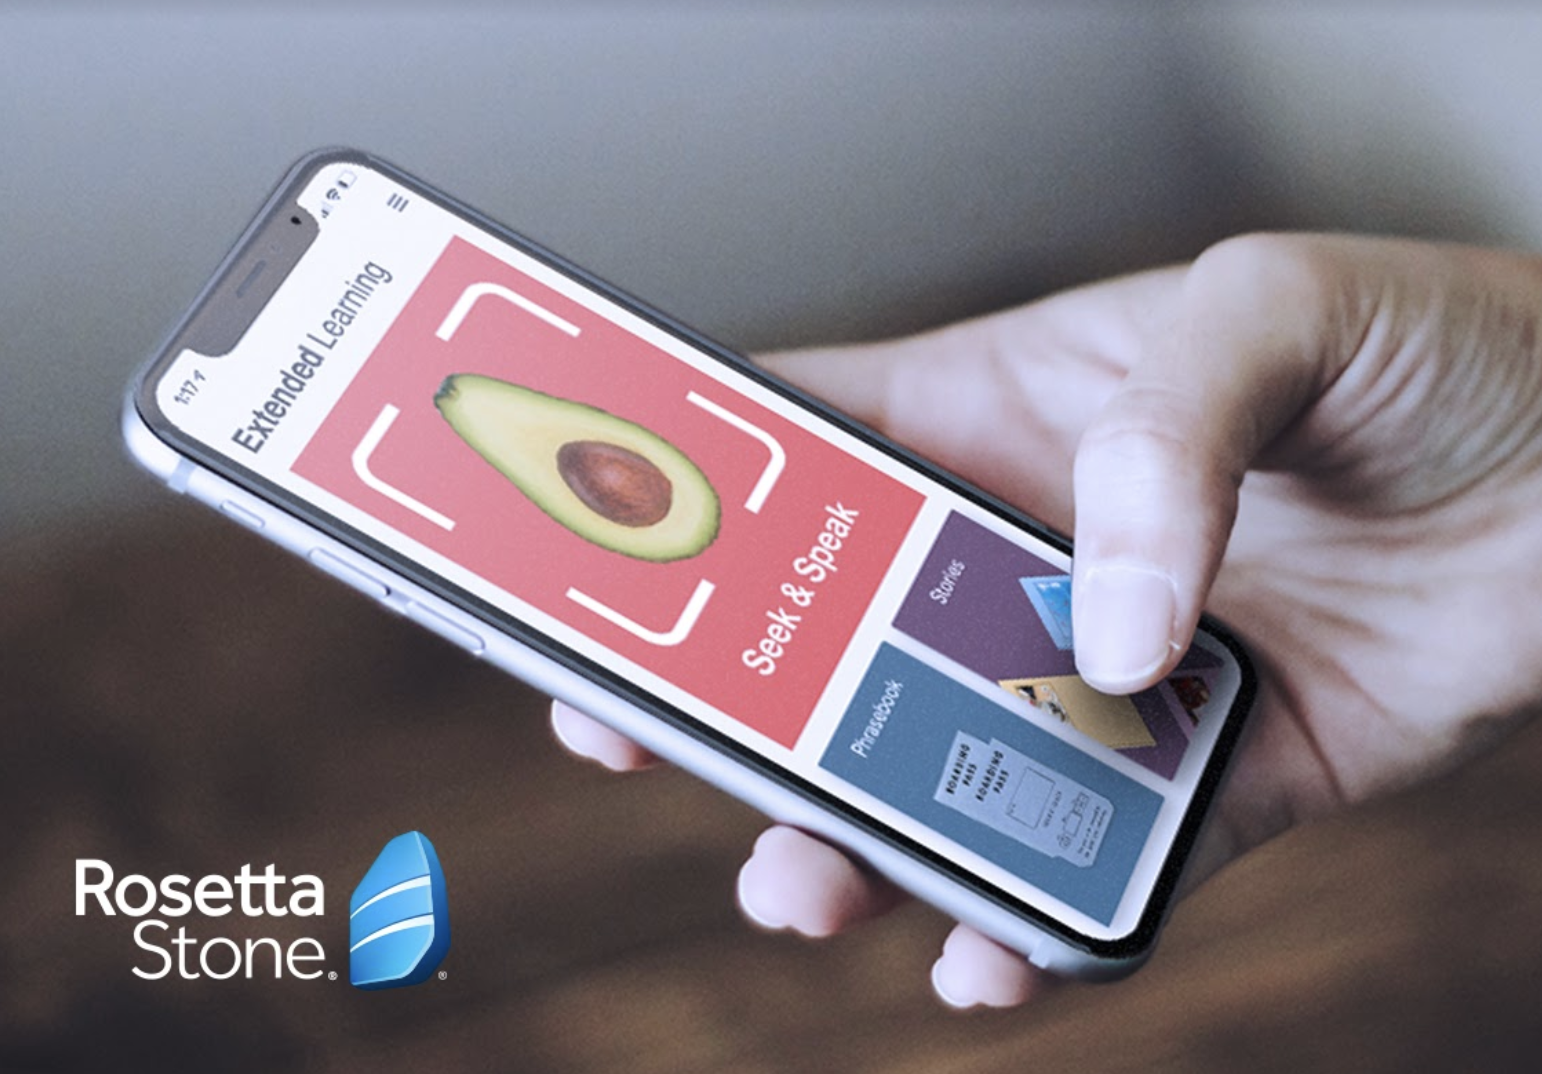 the Rosetta Stone phone app 